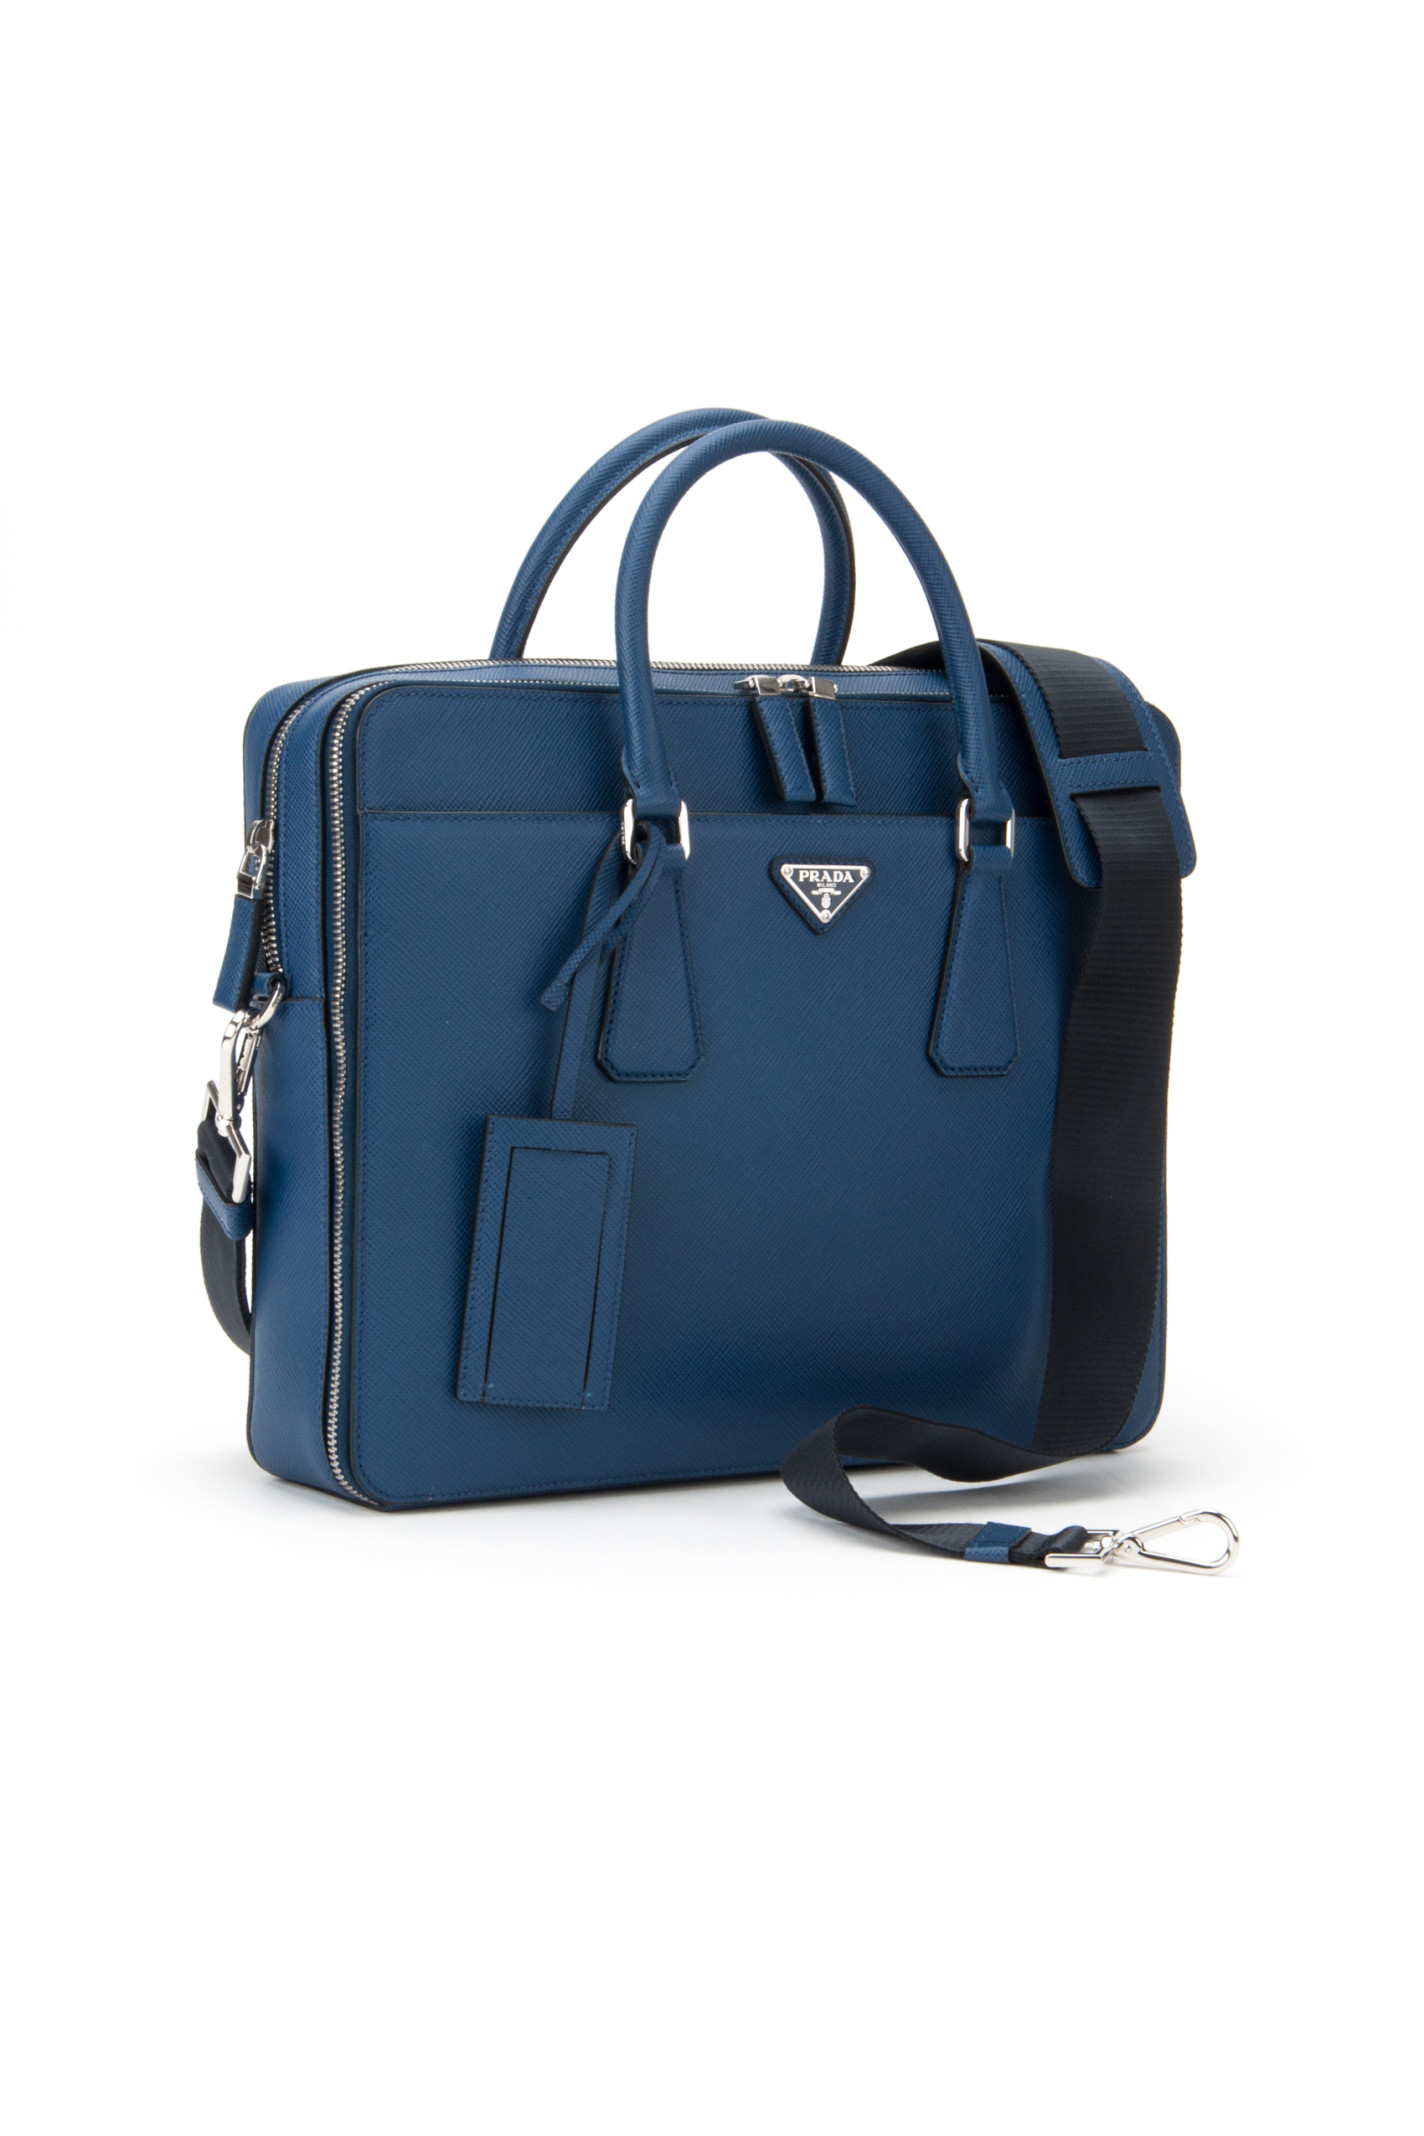 Prada Saffiano Travel Bag in Blue for Men (BLUETTE) | Lyst  